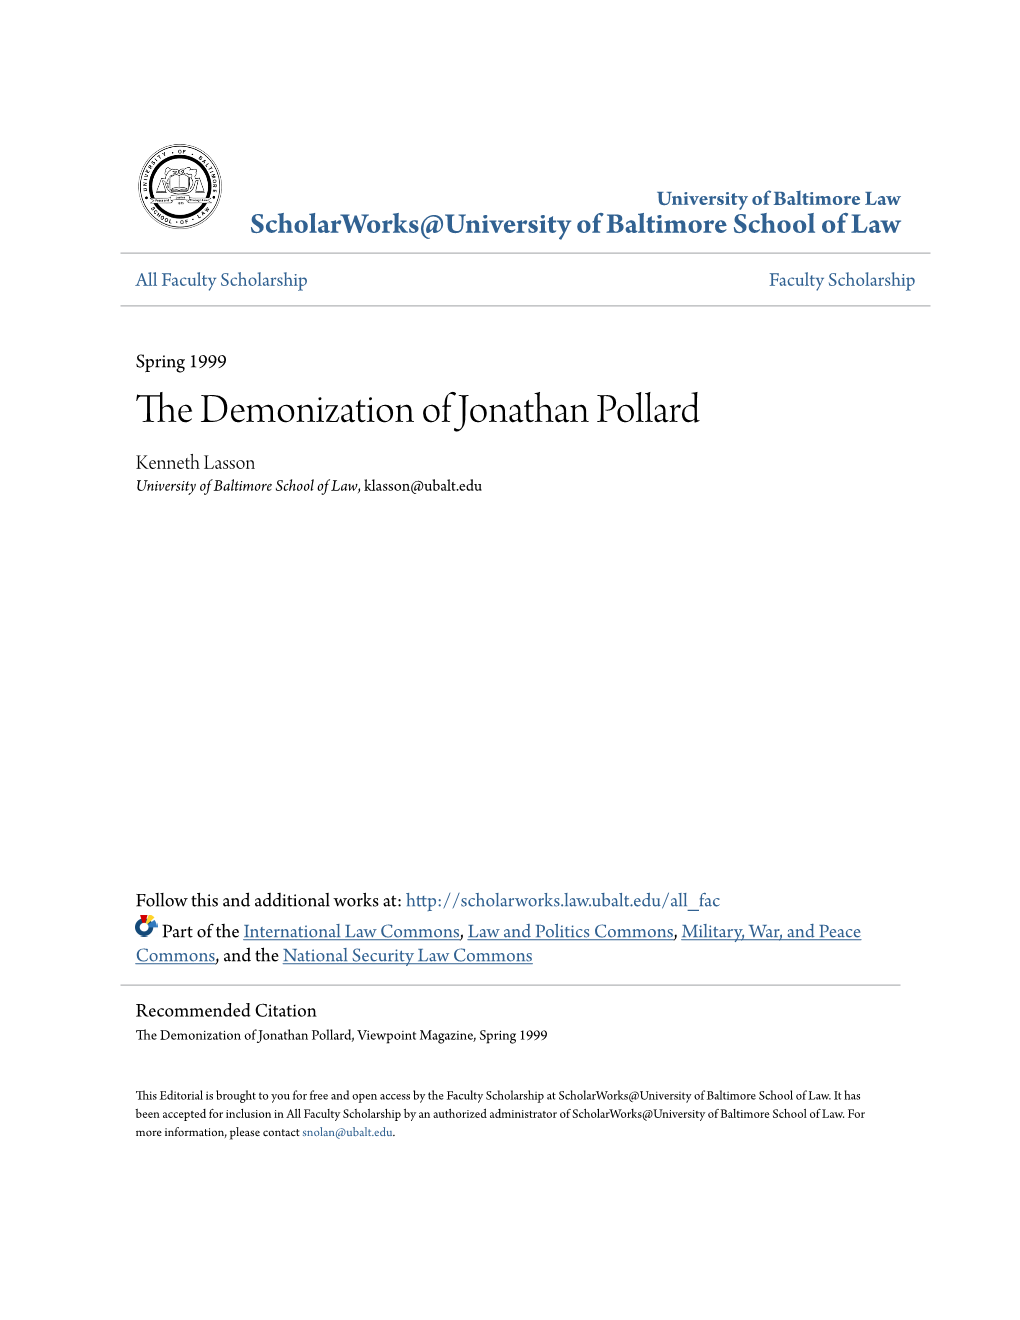 The Demonization of Jonathan Pollard